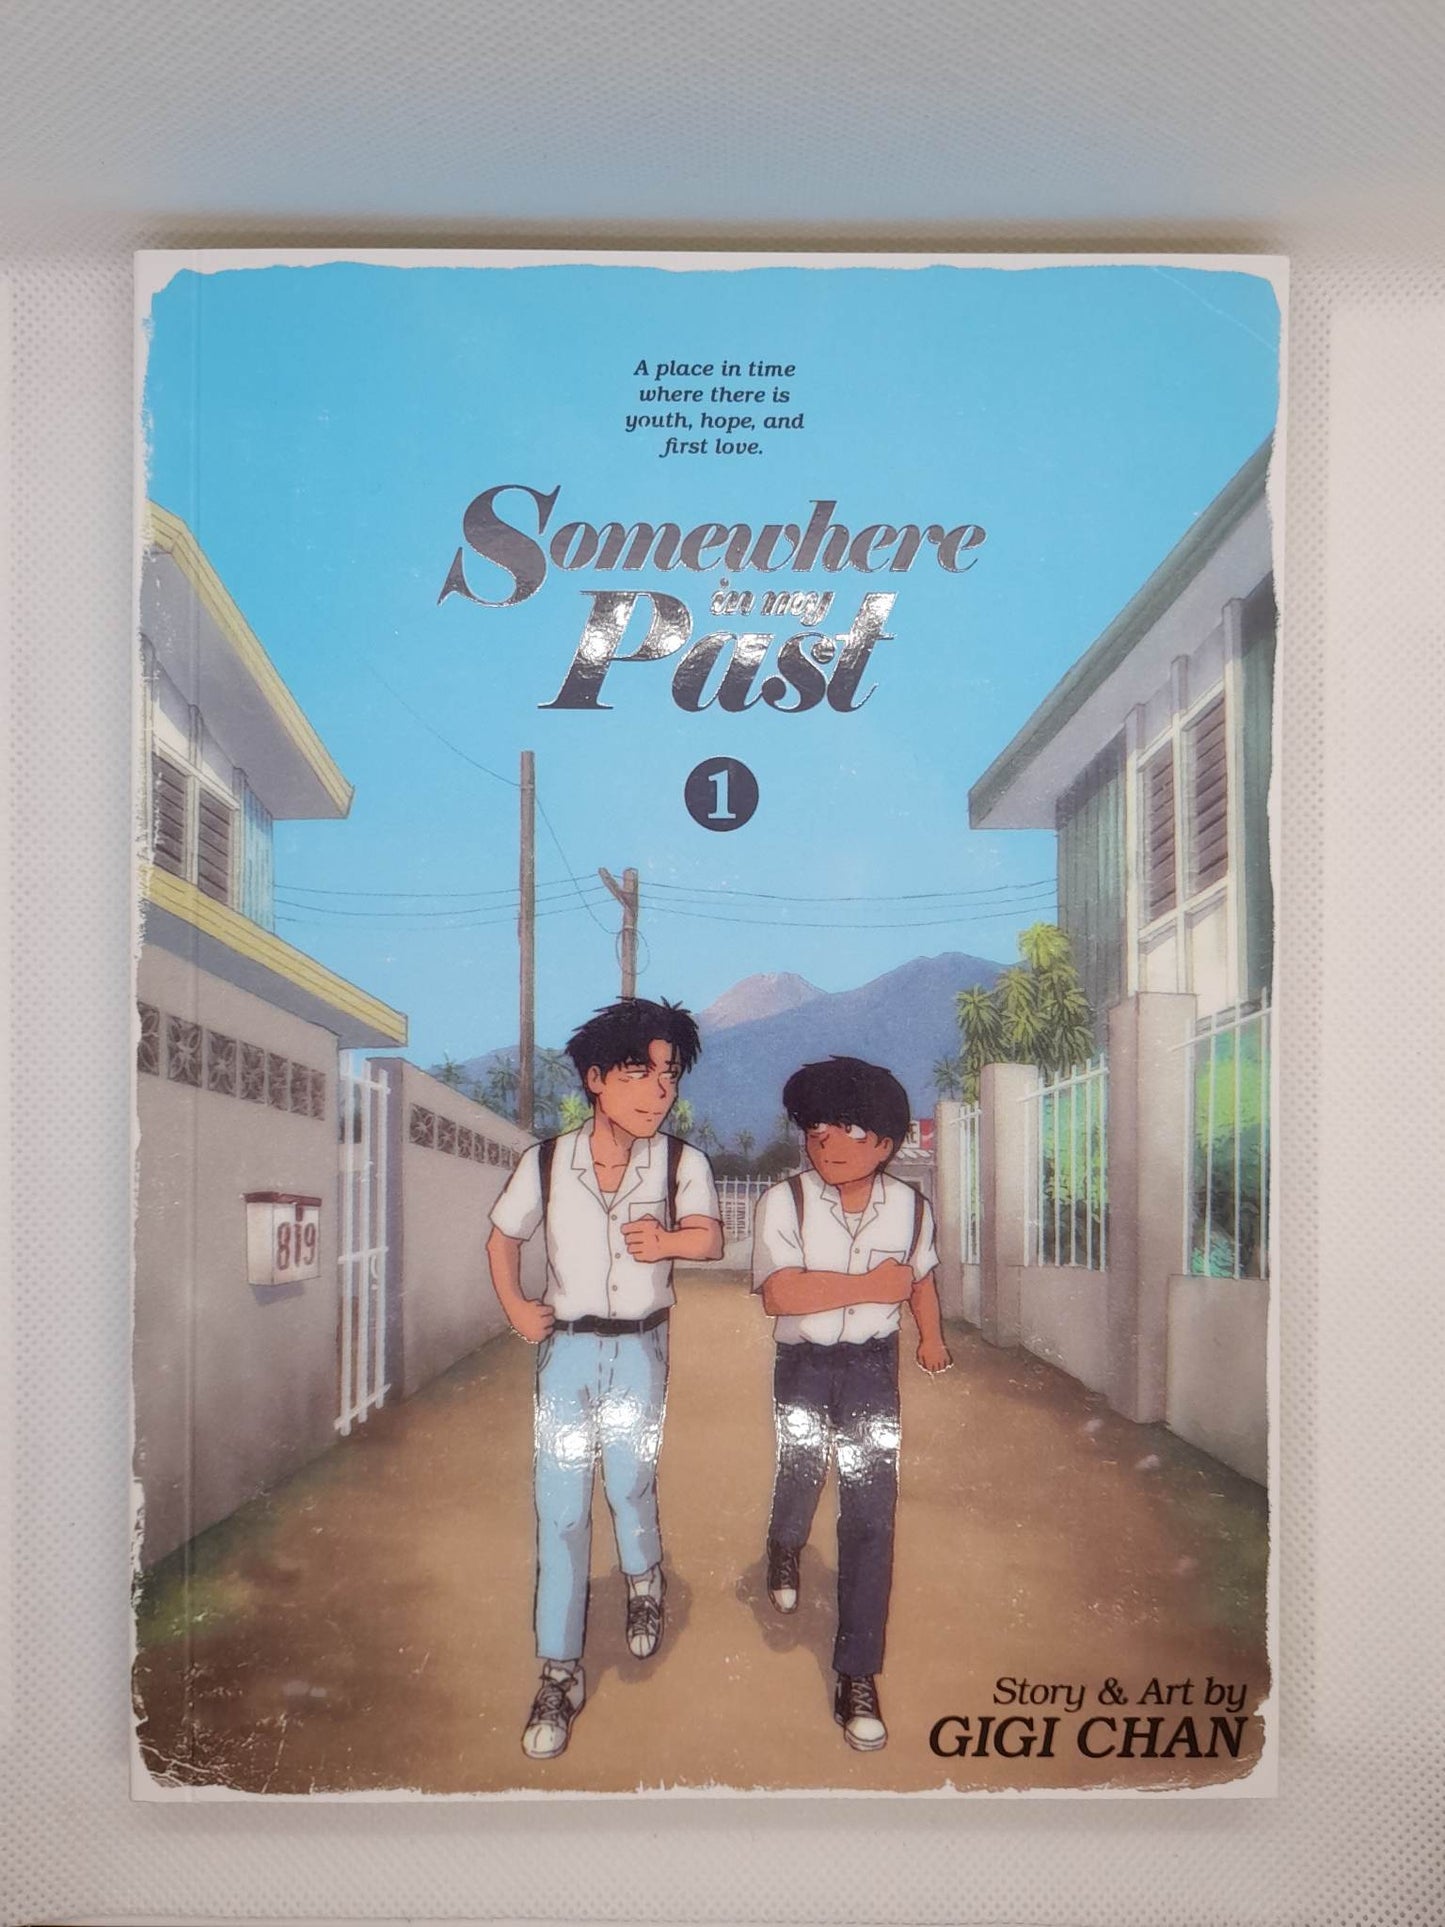 Somewhere In My Past vol. 1 by Gigi Chan (English Language)